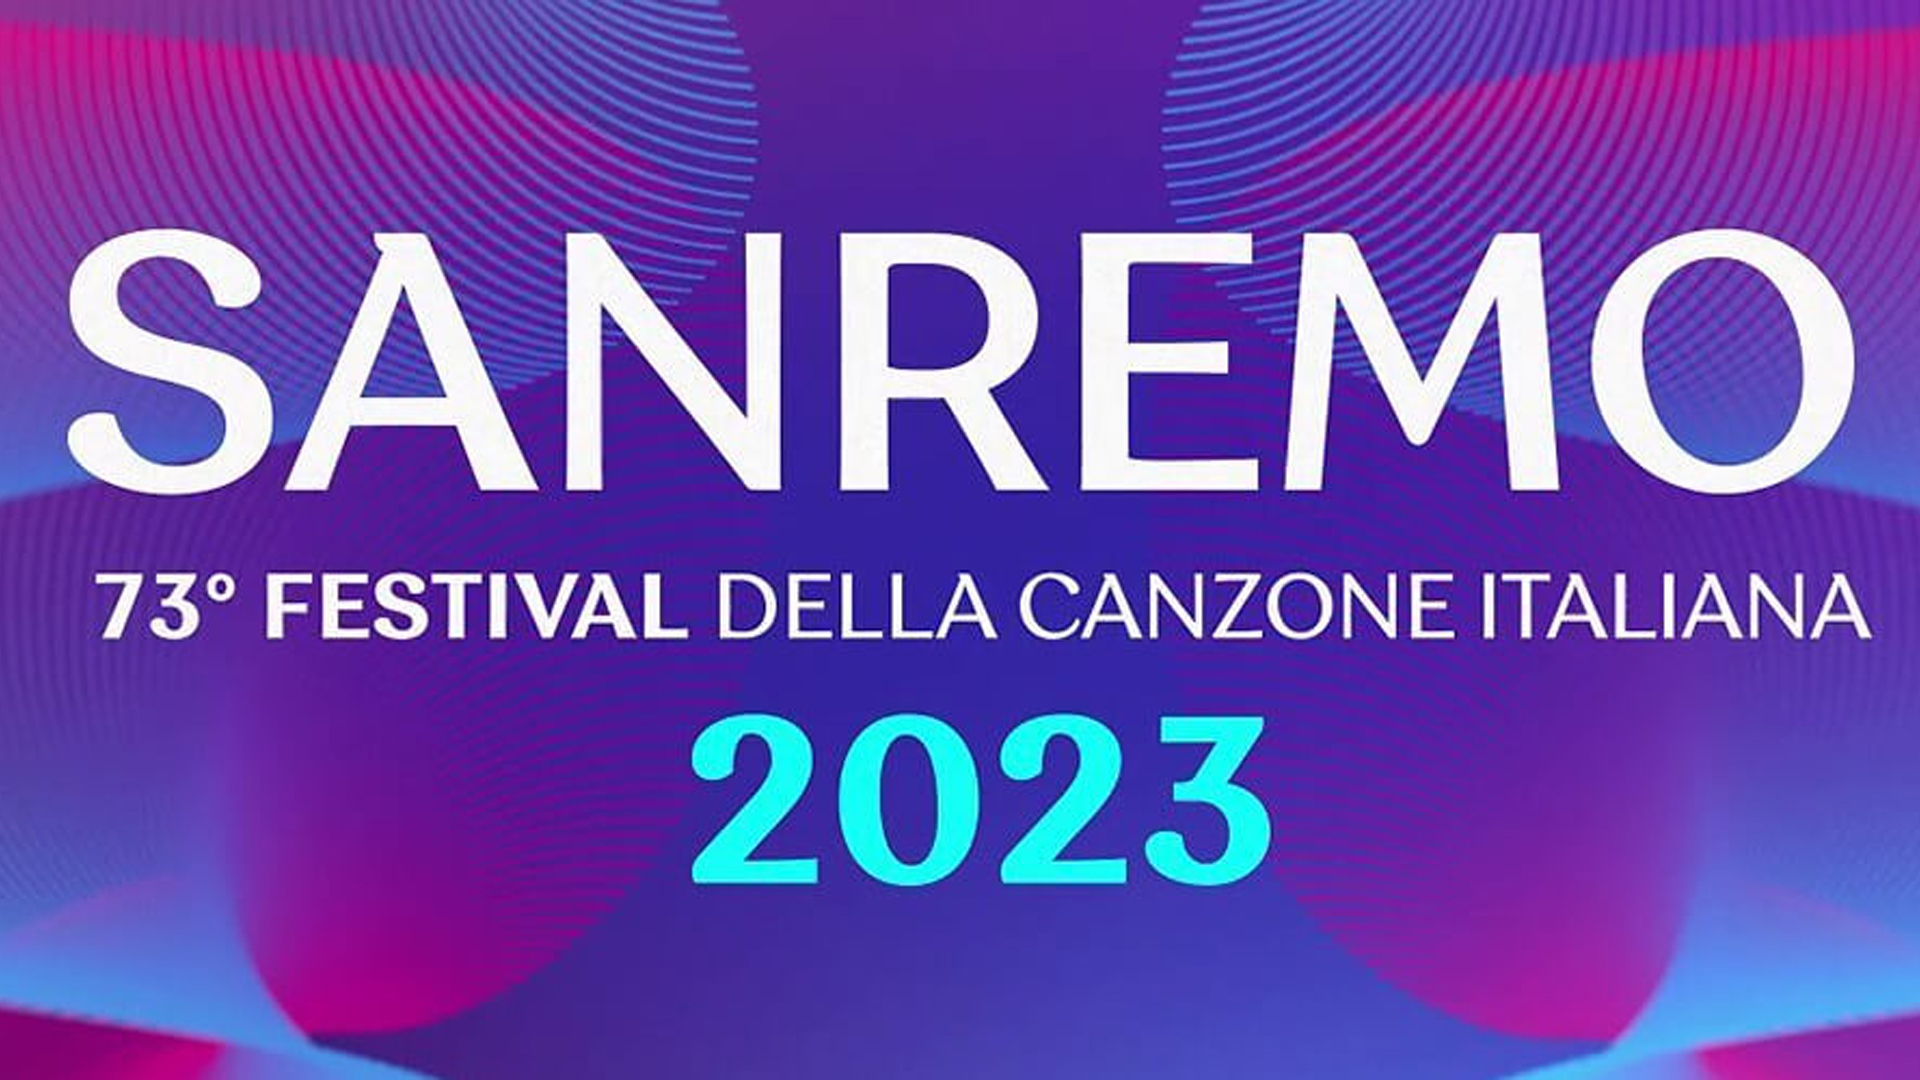 Sanremo music festival